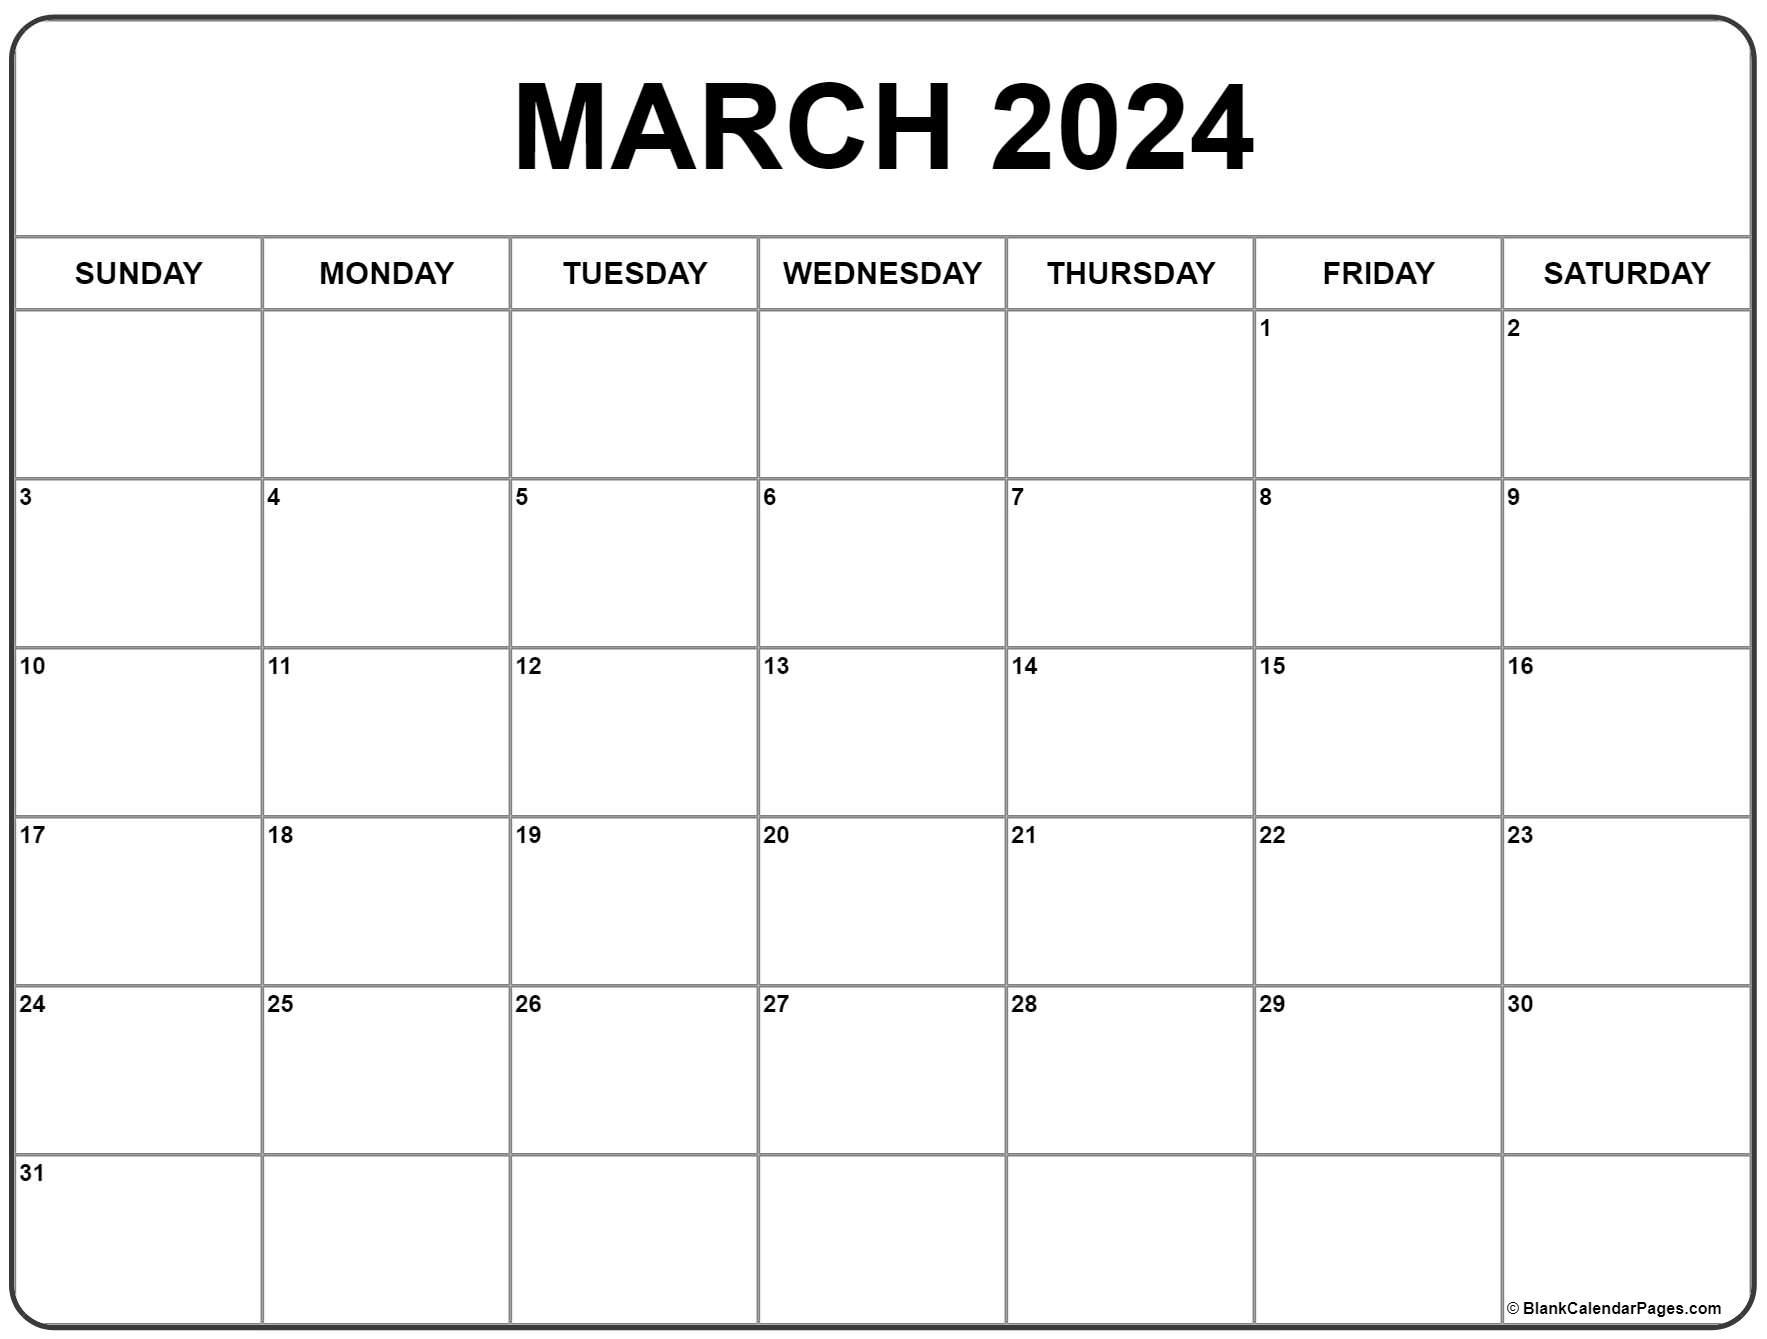 March 2024 Calendar | Free Printable Calendar for March 2024 Calendar Printable Free